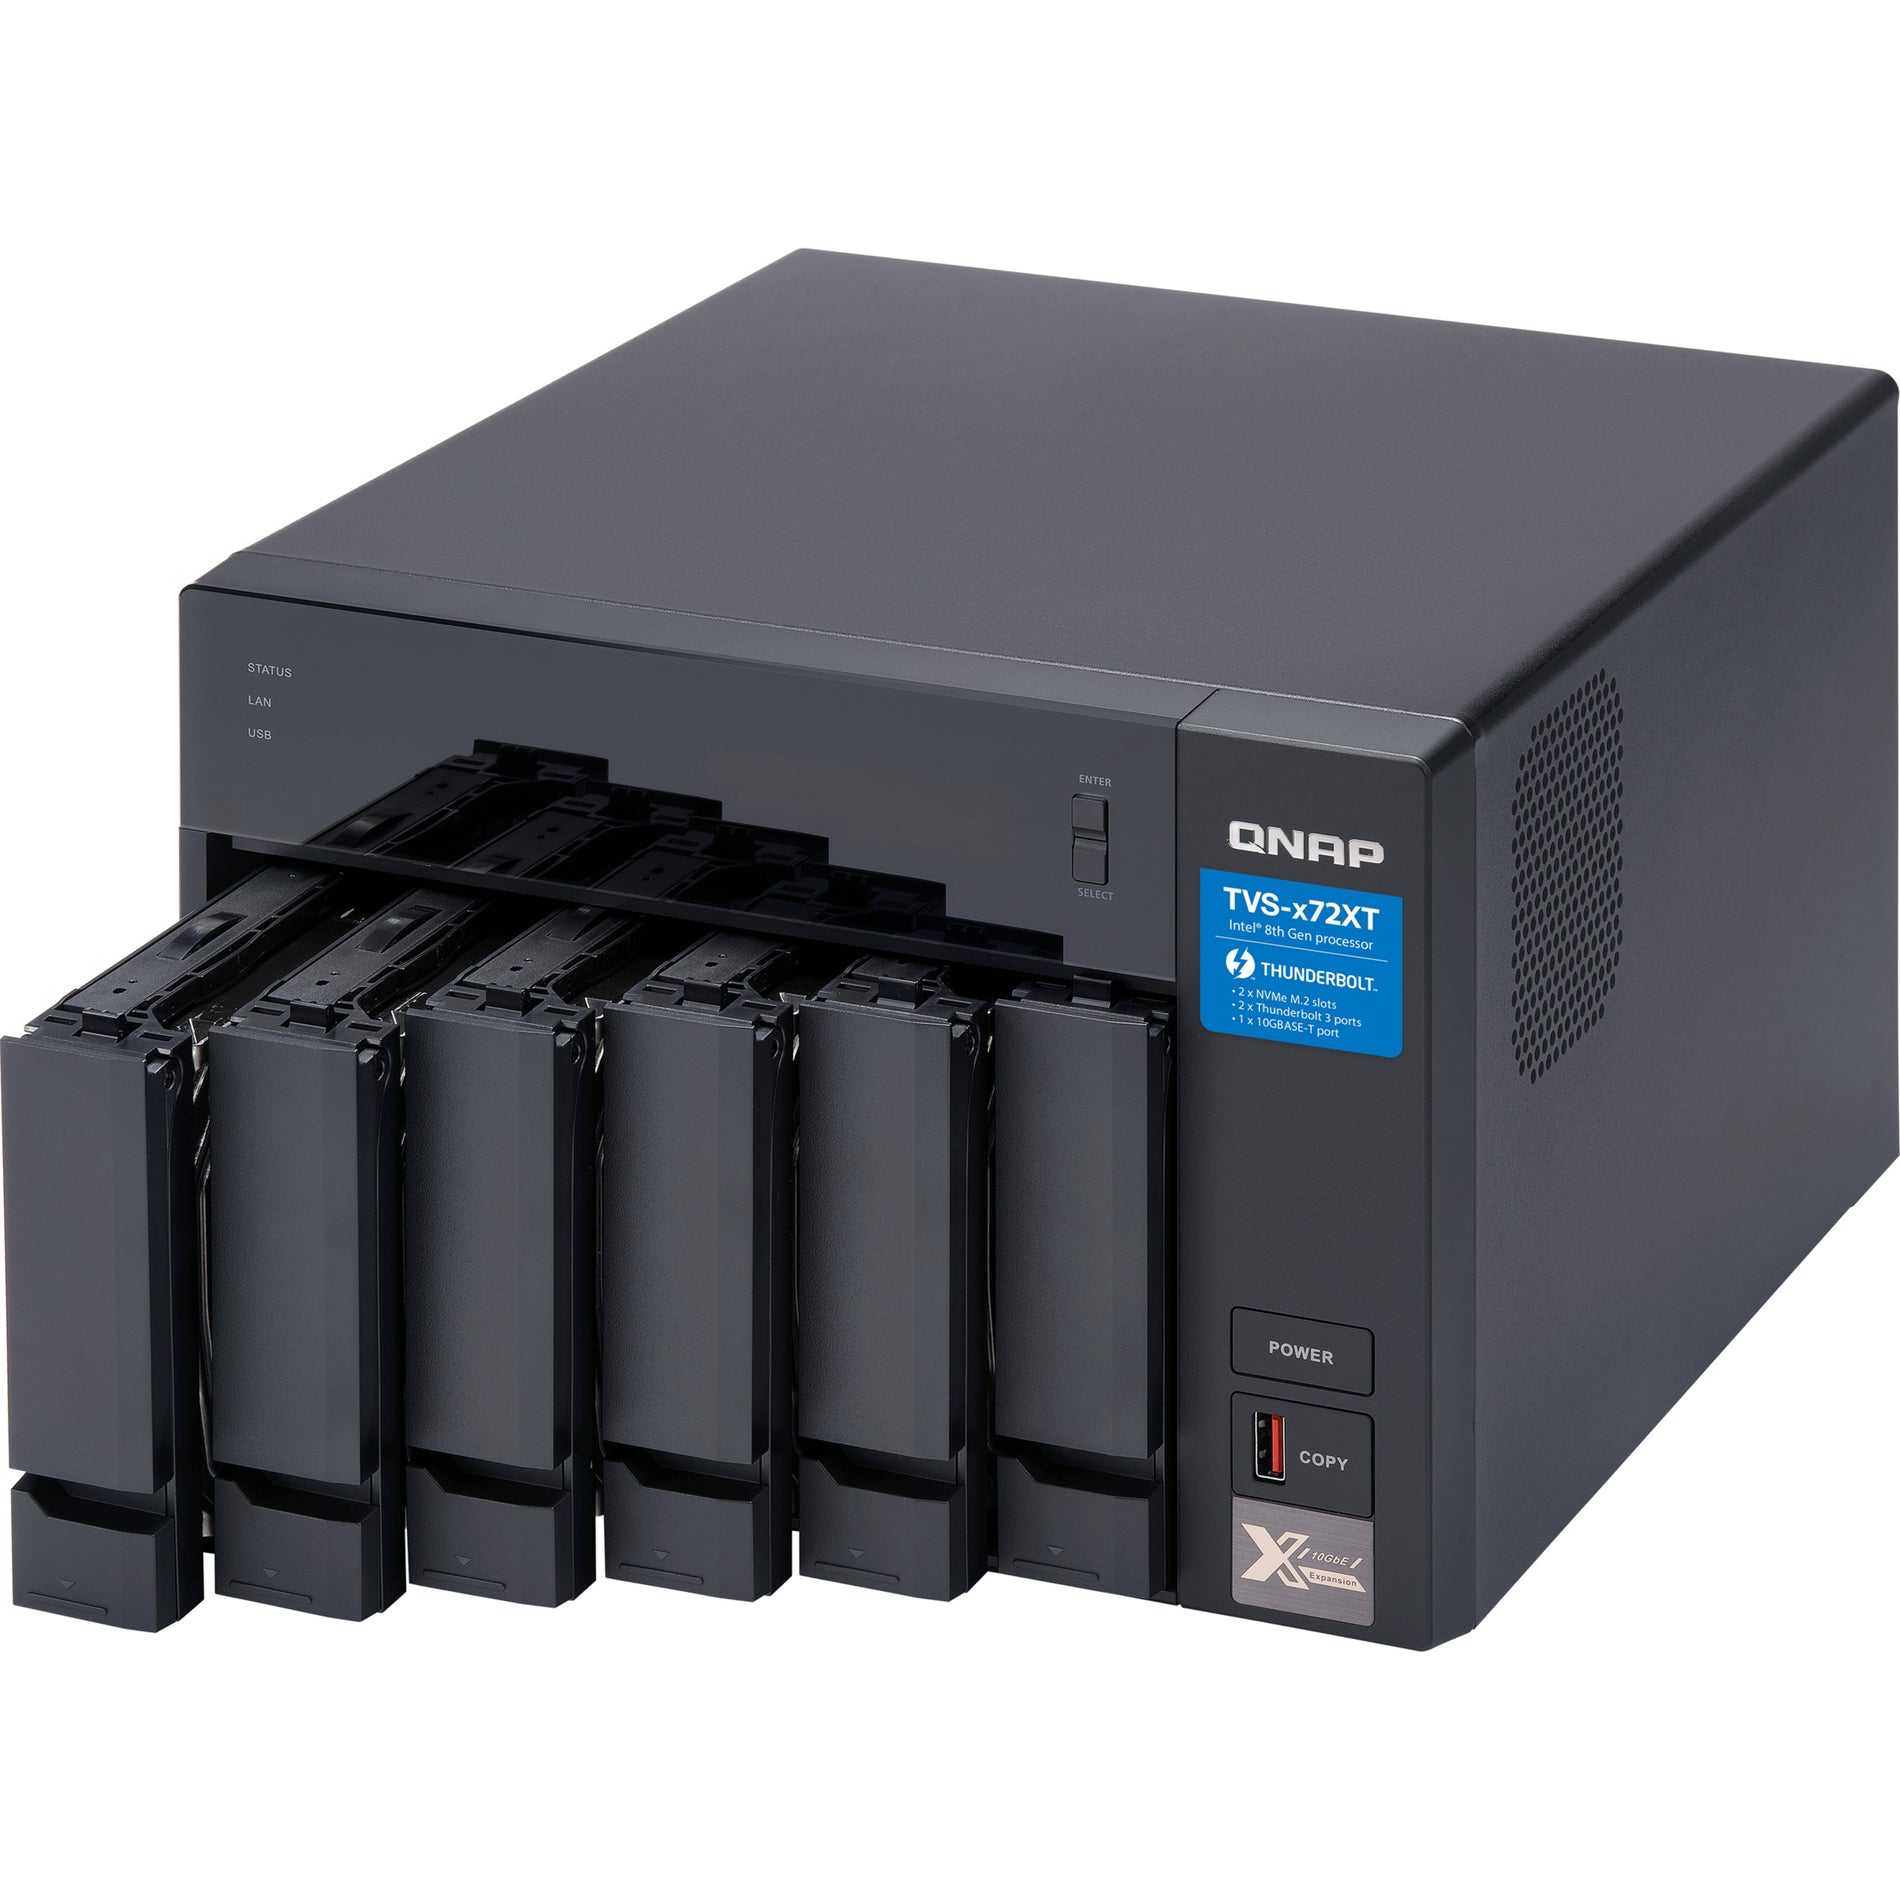 QNAP TVS-672XT-I3-8G-US TVS-672XT-I3-8G SAN/NAS/DAS Storage System, Quad-core, 8GB RAM, 6 Bays, Thunderbolt 3, 10Gb Ethernet